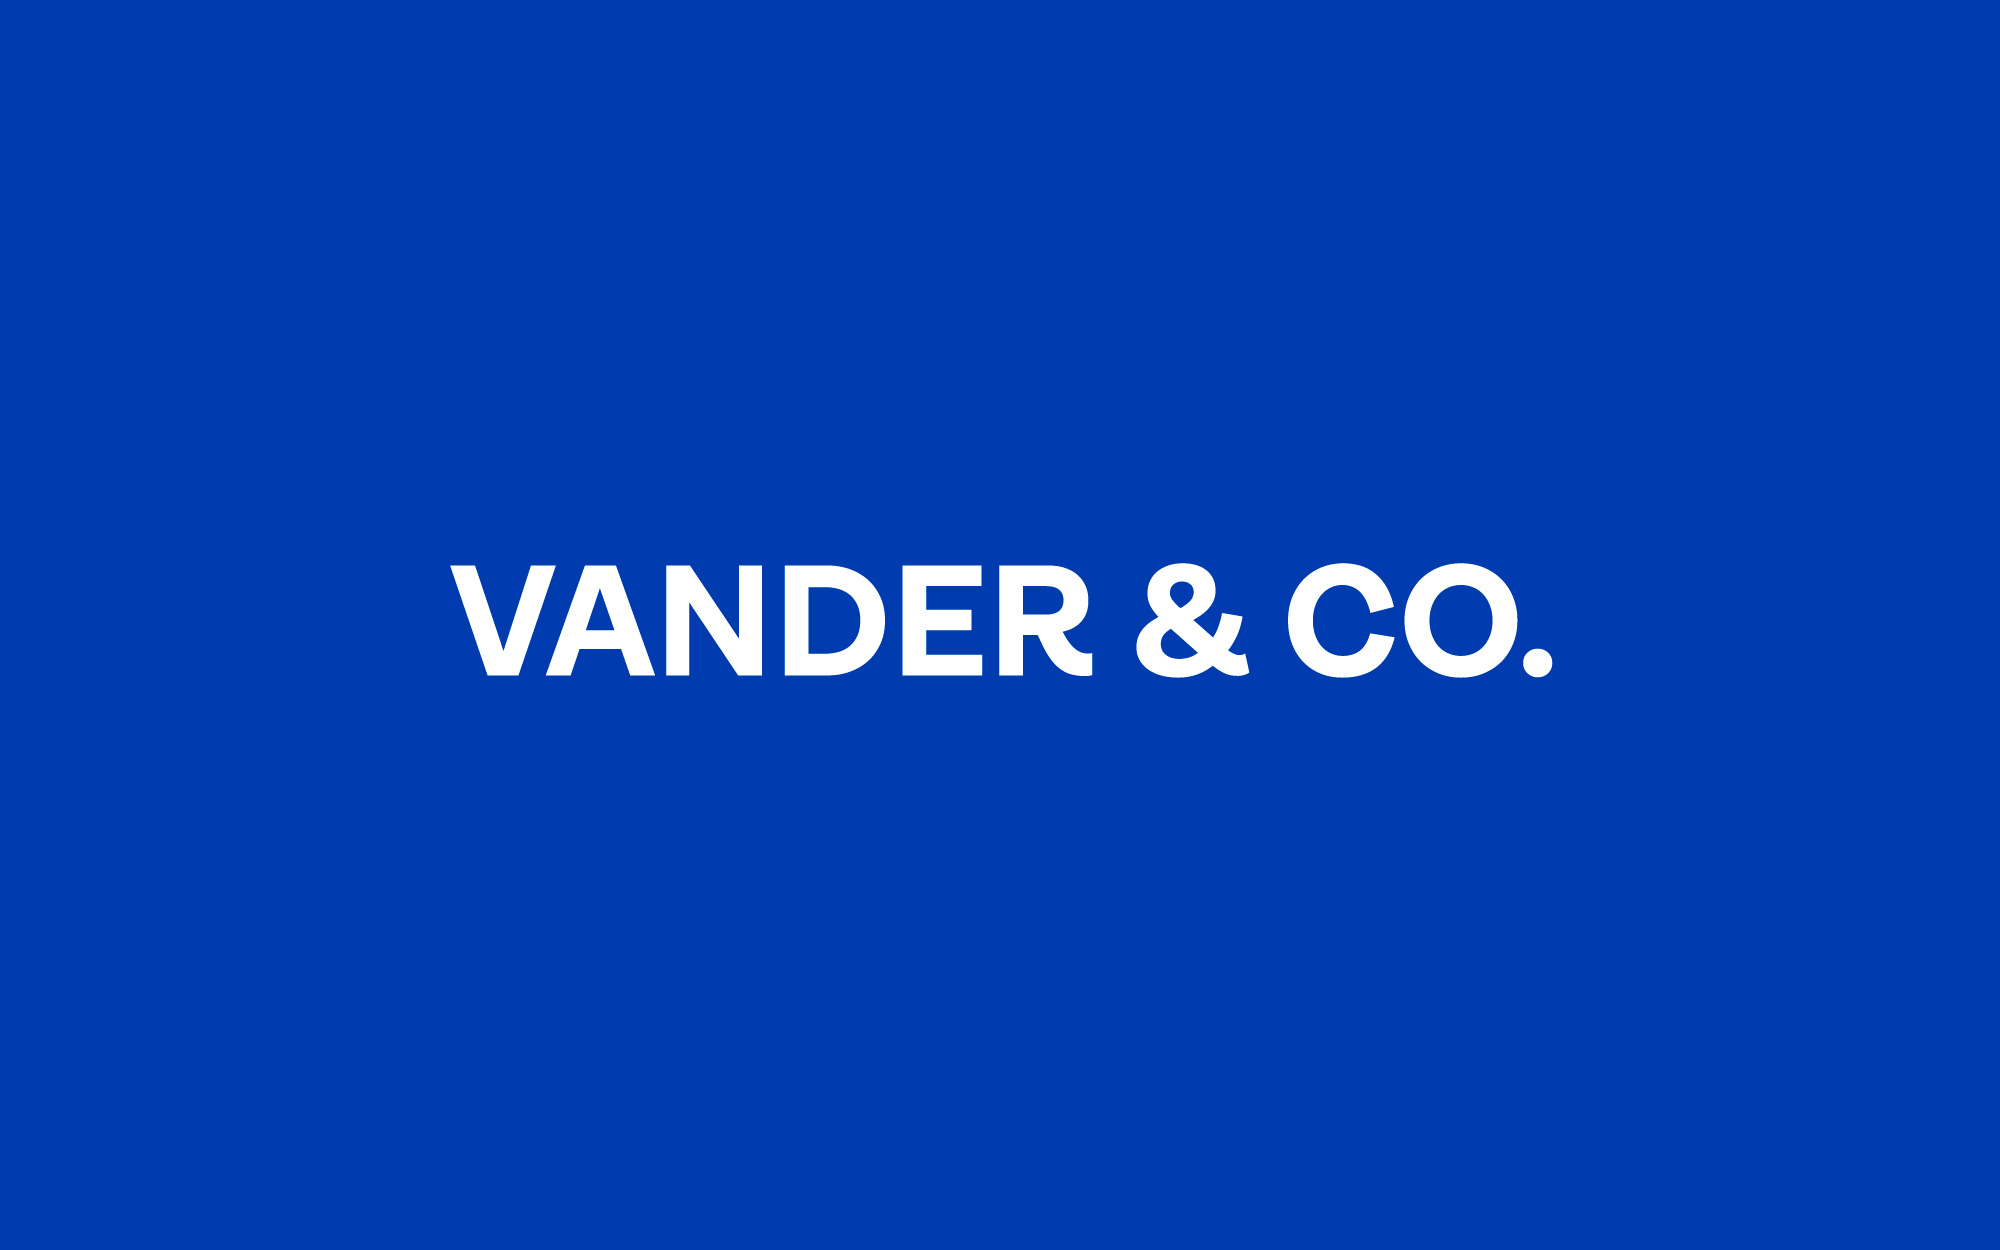 Cover image: Vander & Co. Brand Identity